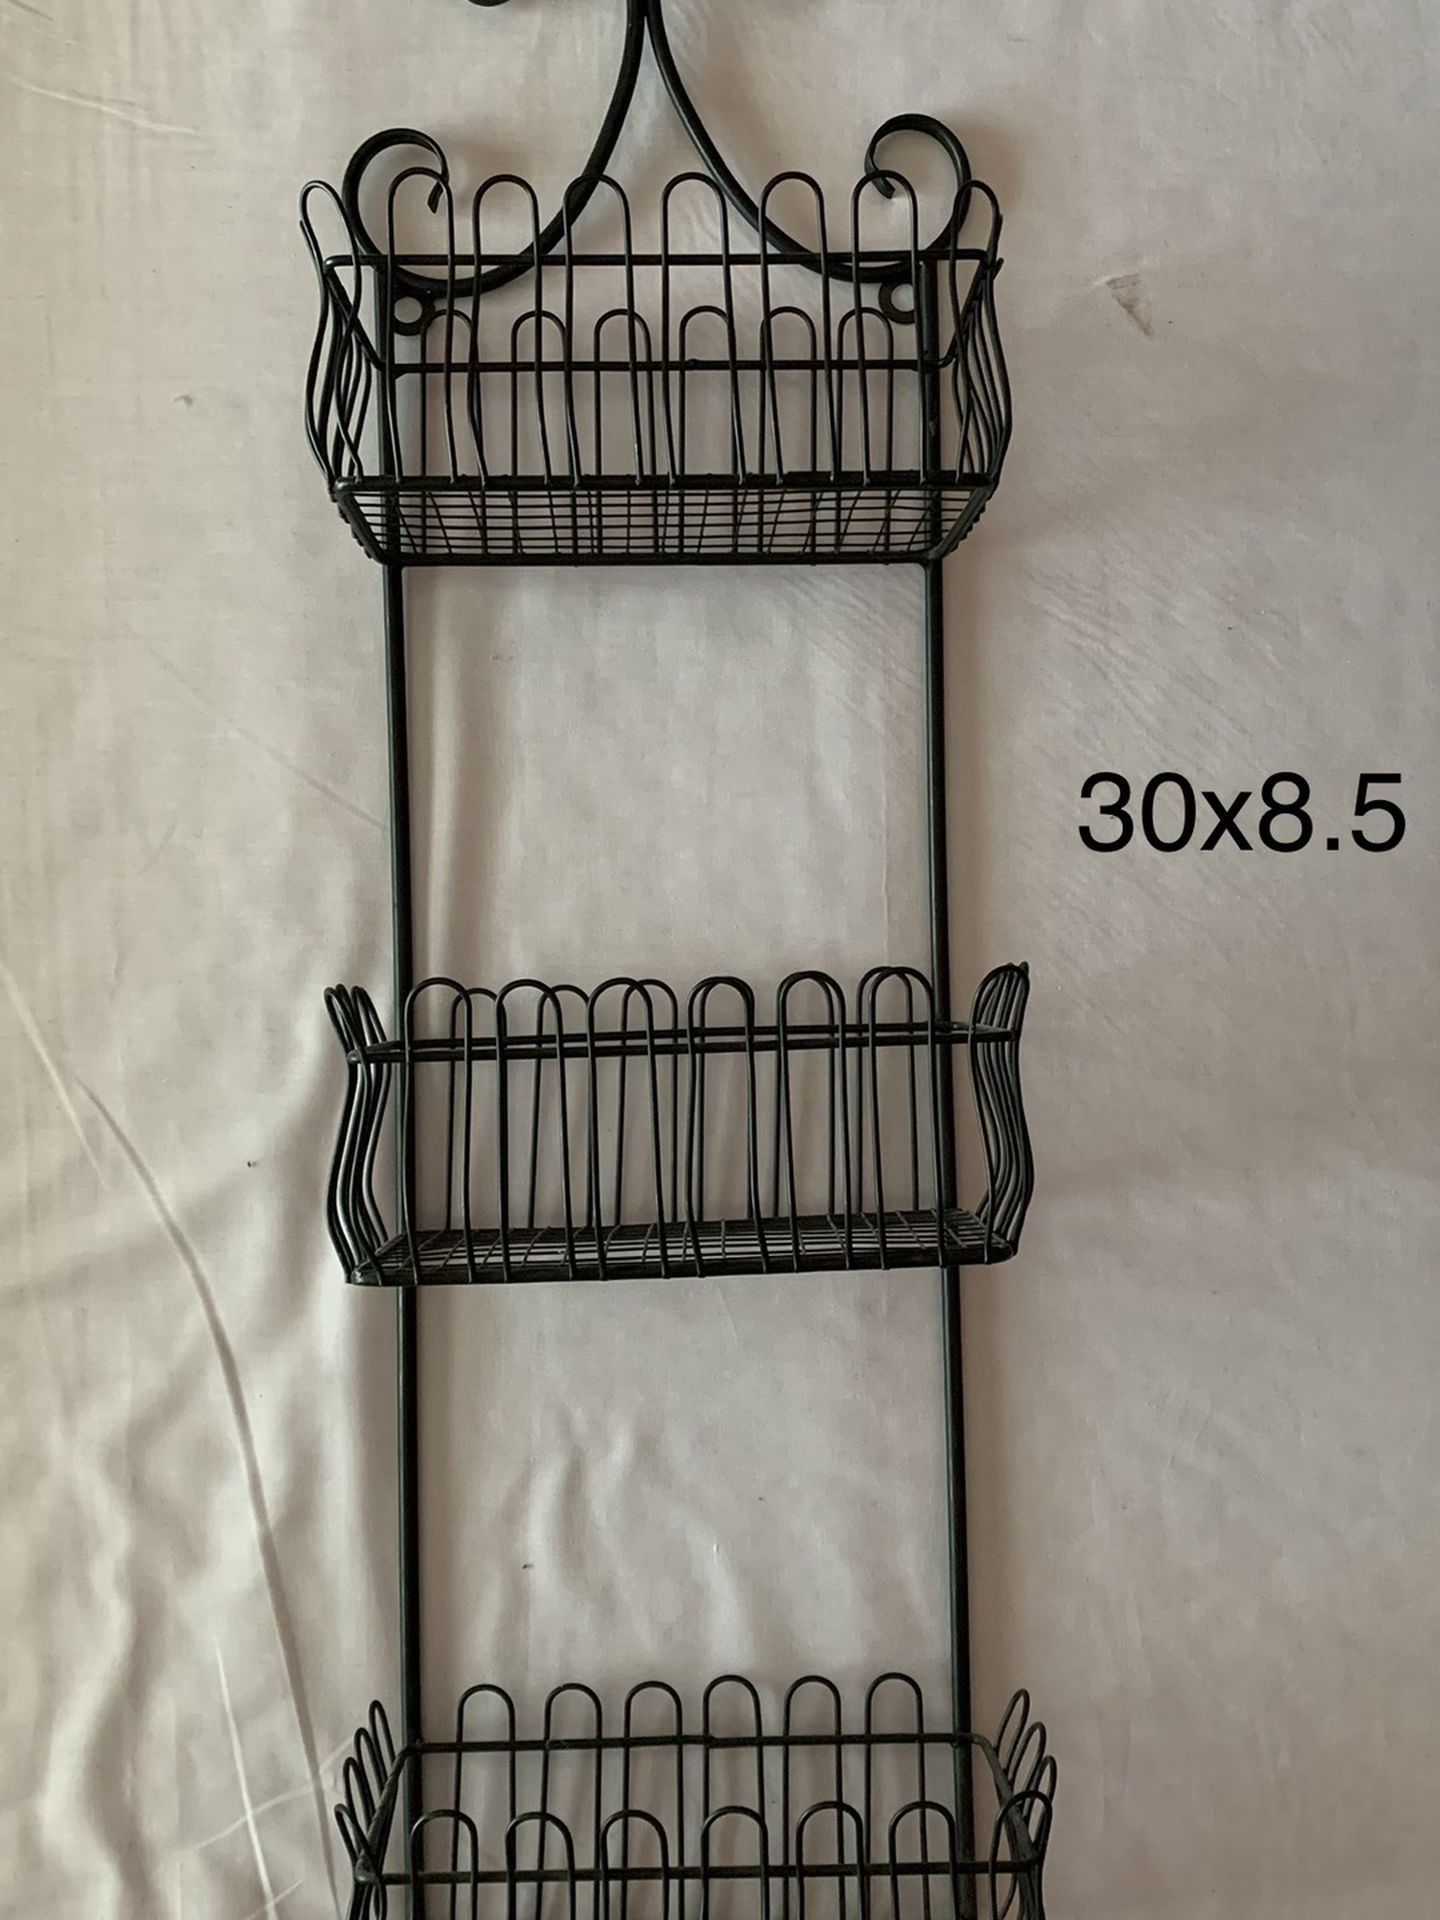 3 basket wall organizer / toiletry holder